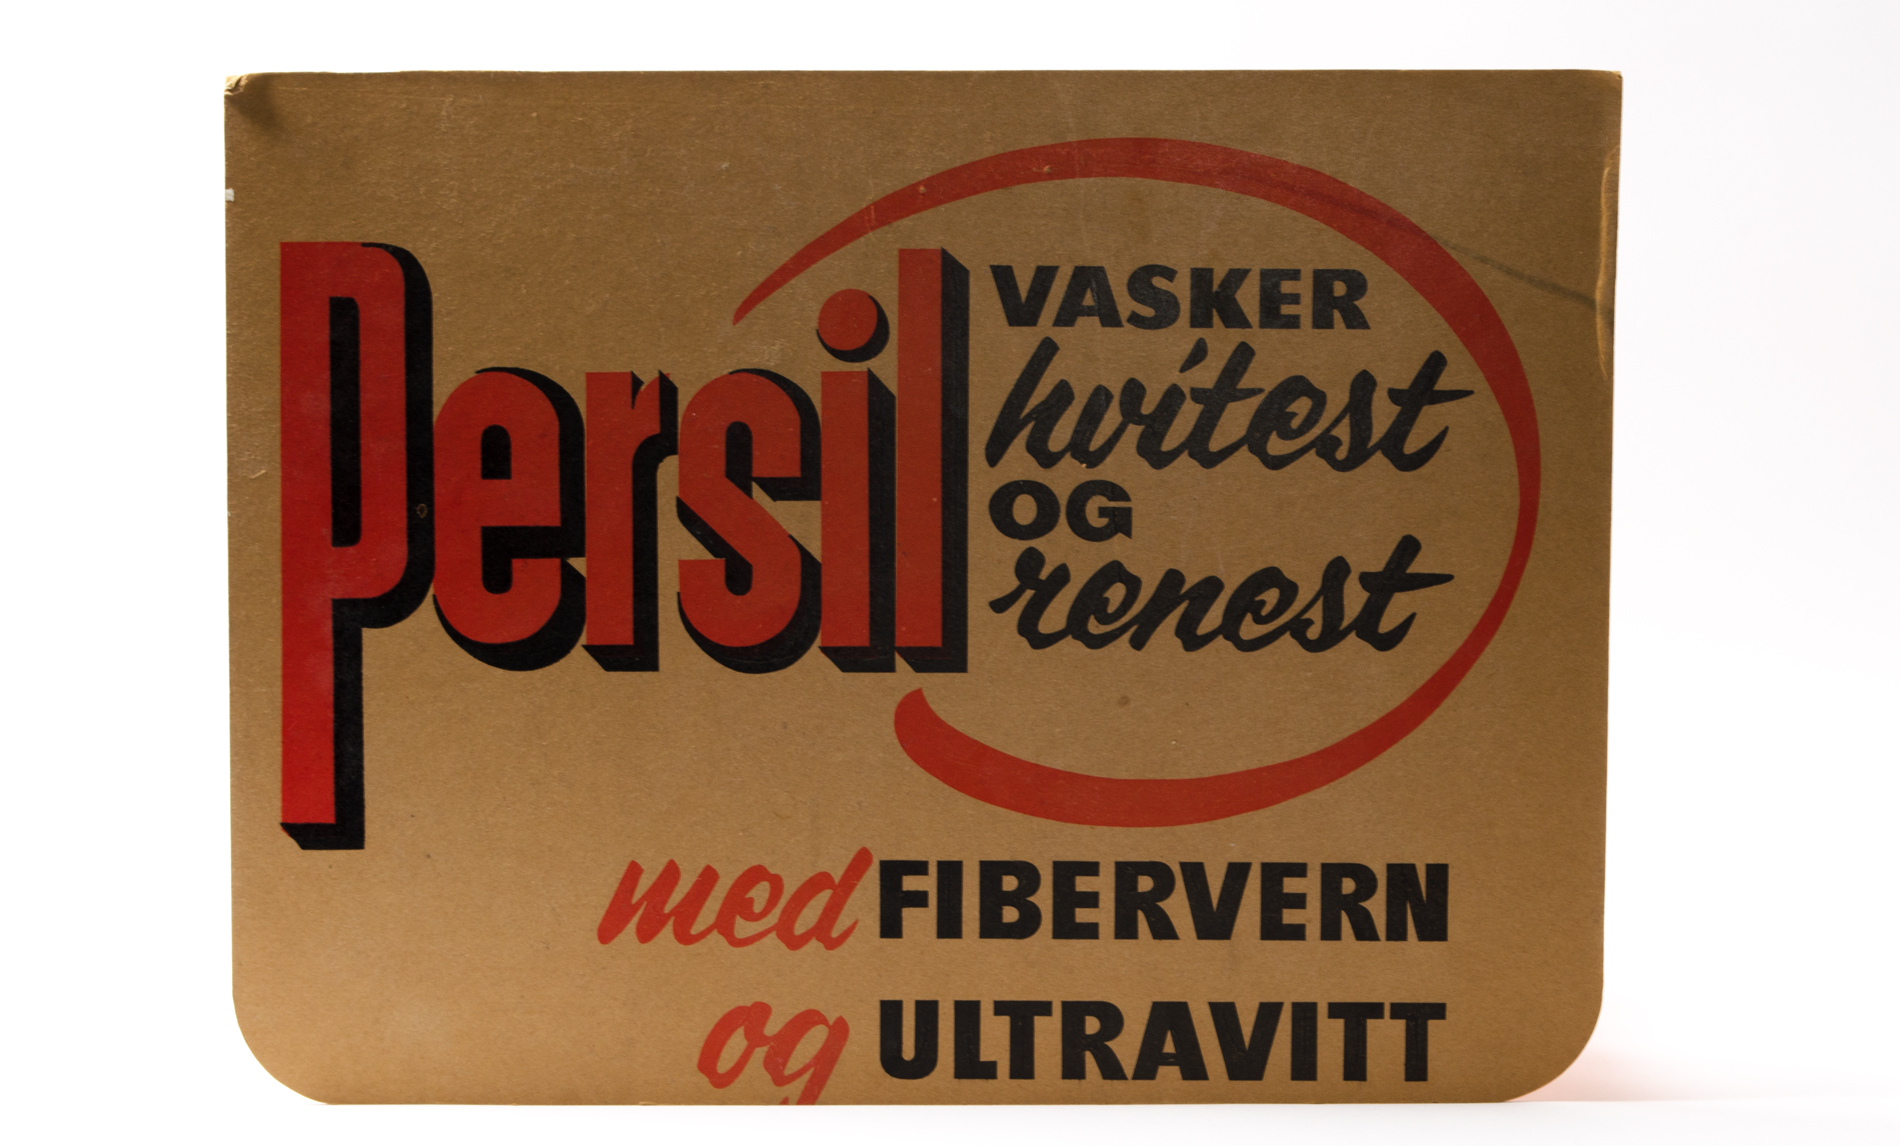 Reklameplakat fra Persil. Foto: Trine Gjøsund / Moss by- og industrimuseum